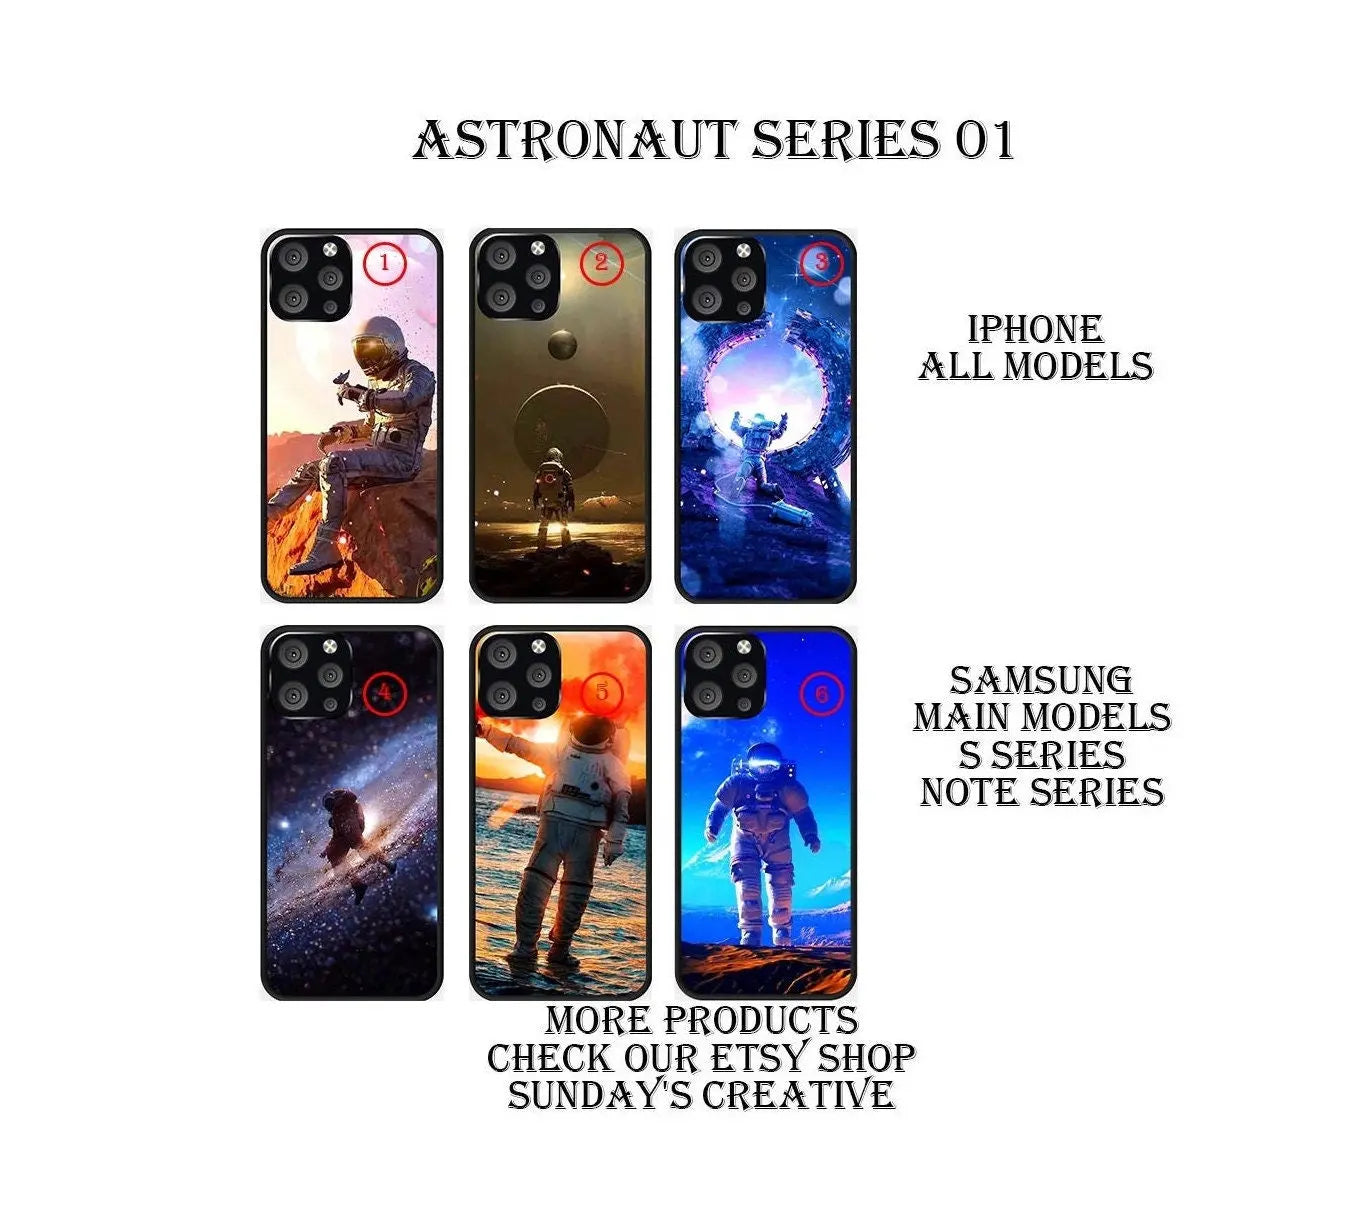 Designed phone cases Astronaut series 01 Sunday's Creative